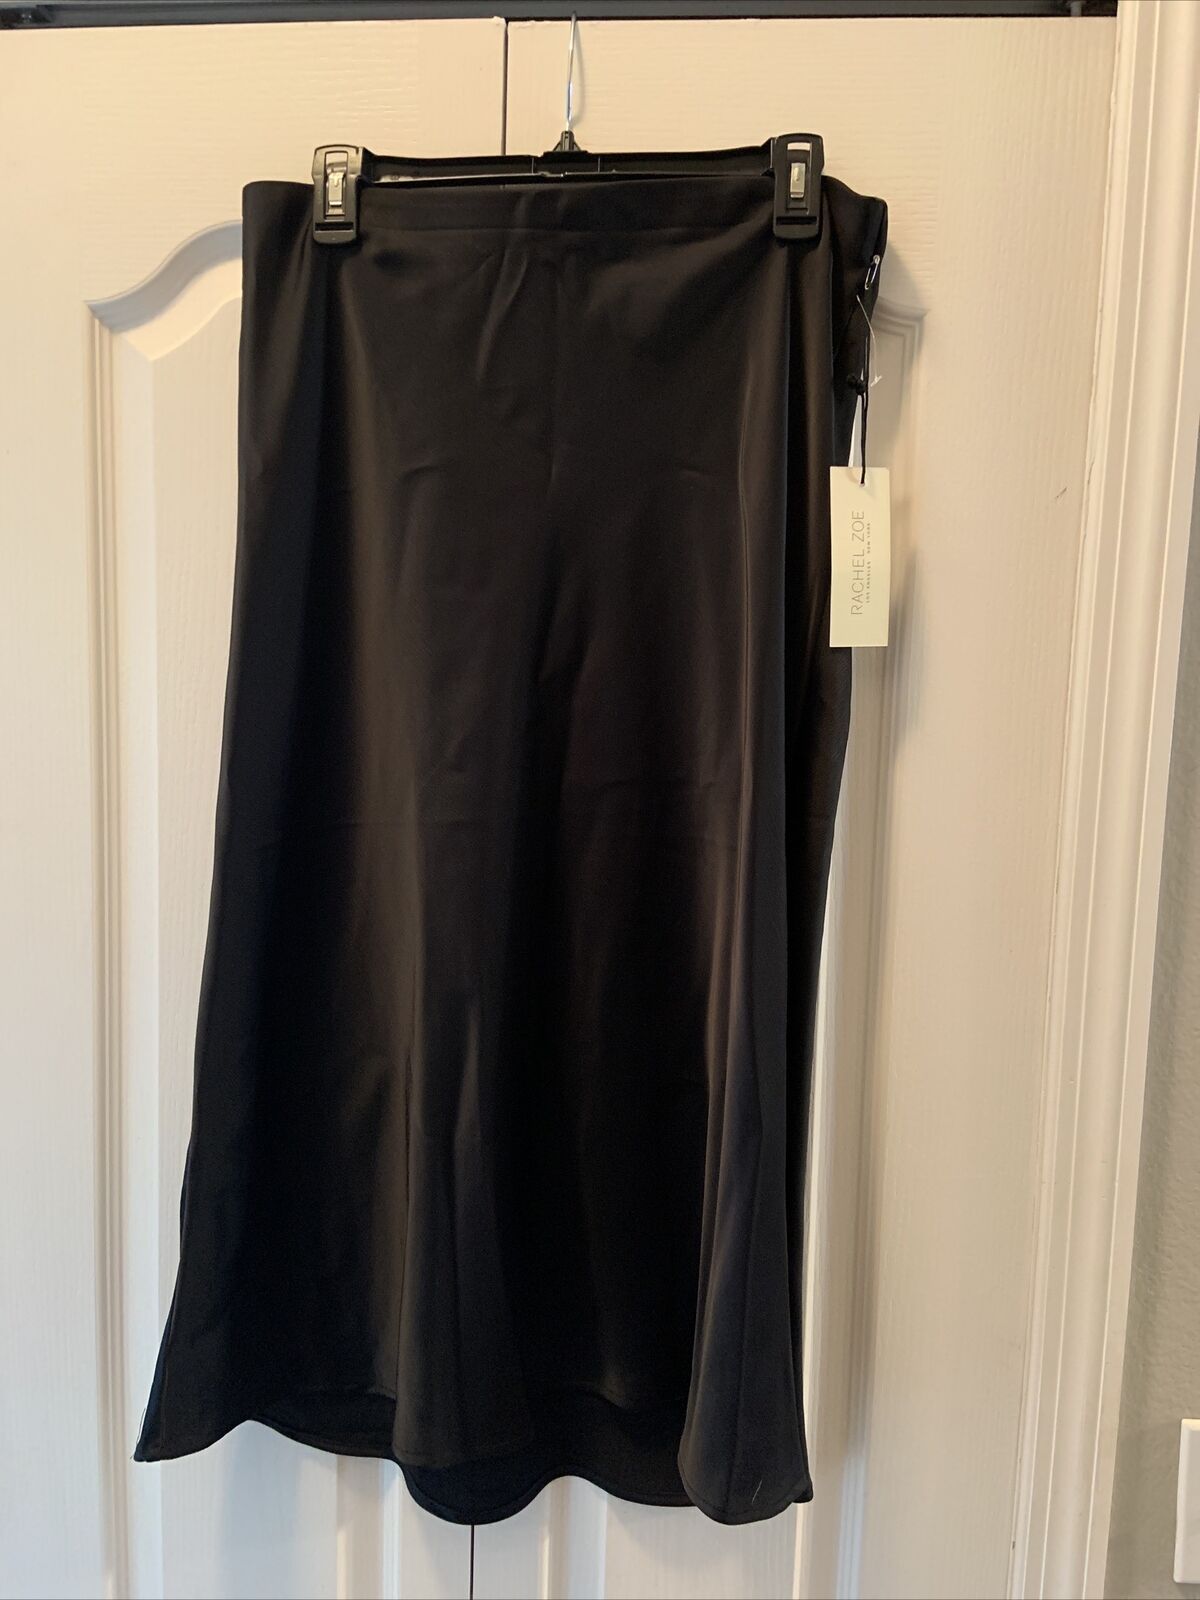 Rachel Zoe Black midi skirt Satin Like Material  Size 12 | eBay US